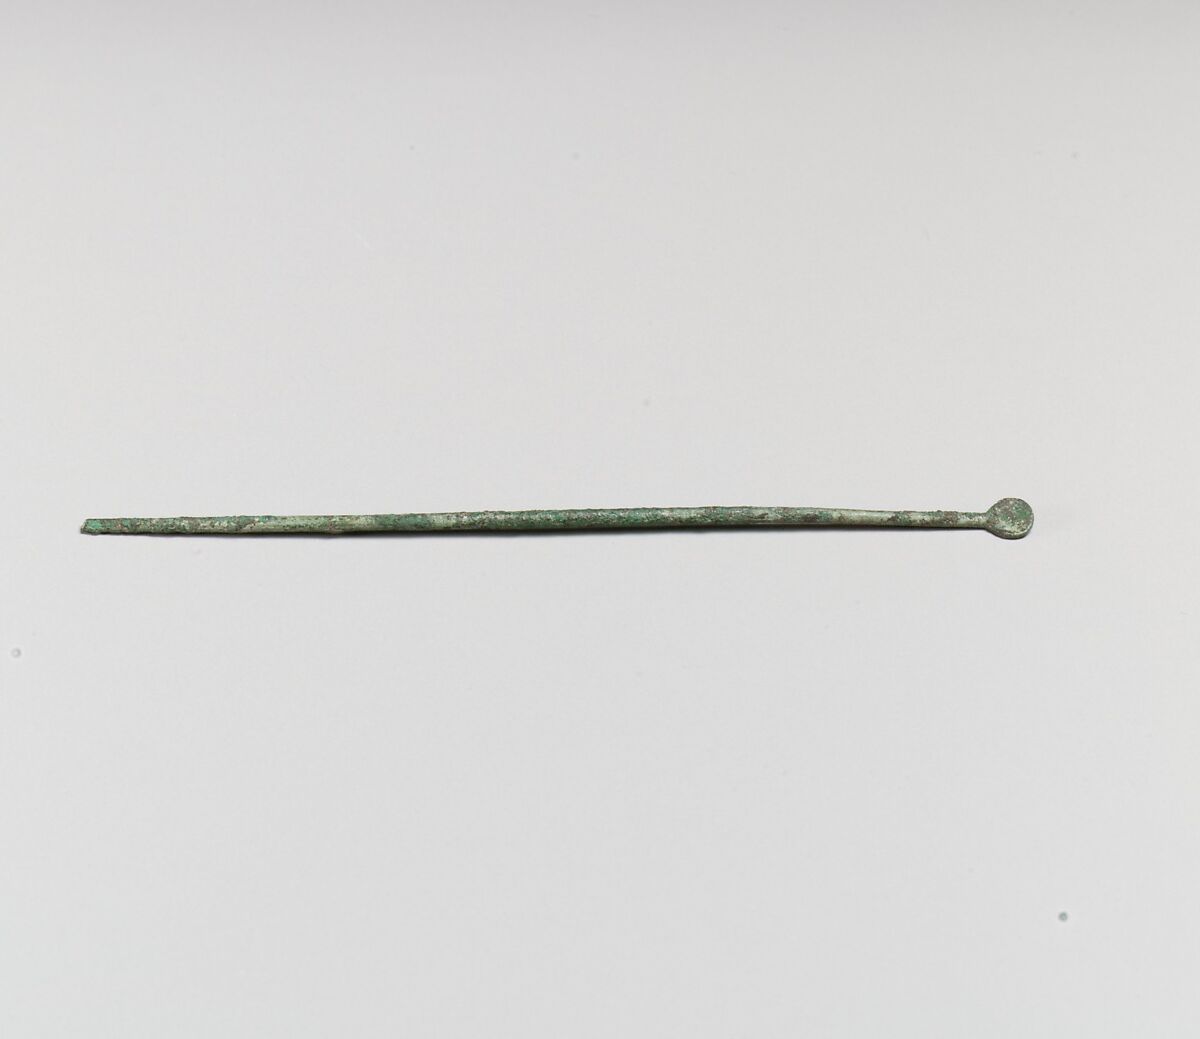 Spoon or ligula, Bronze, Roman 